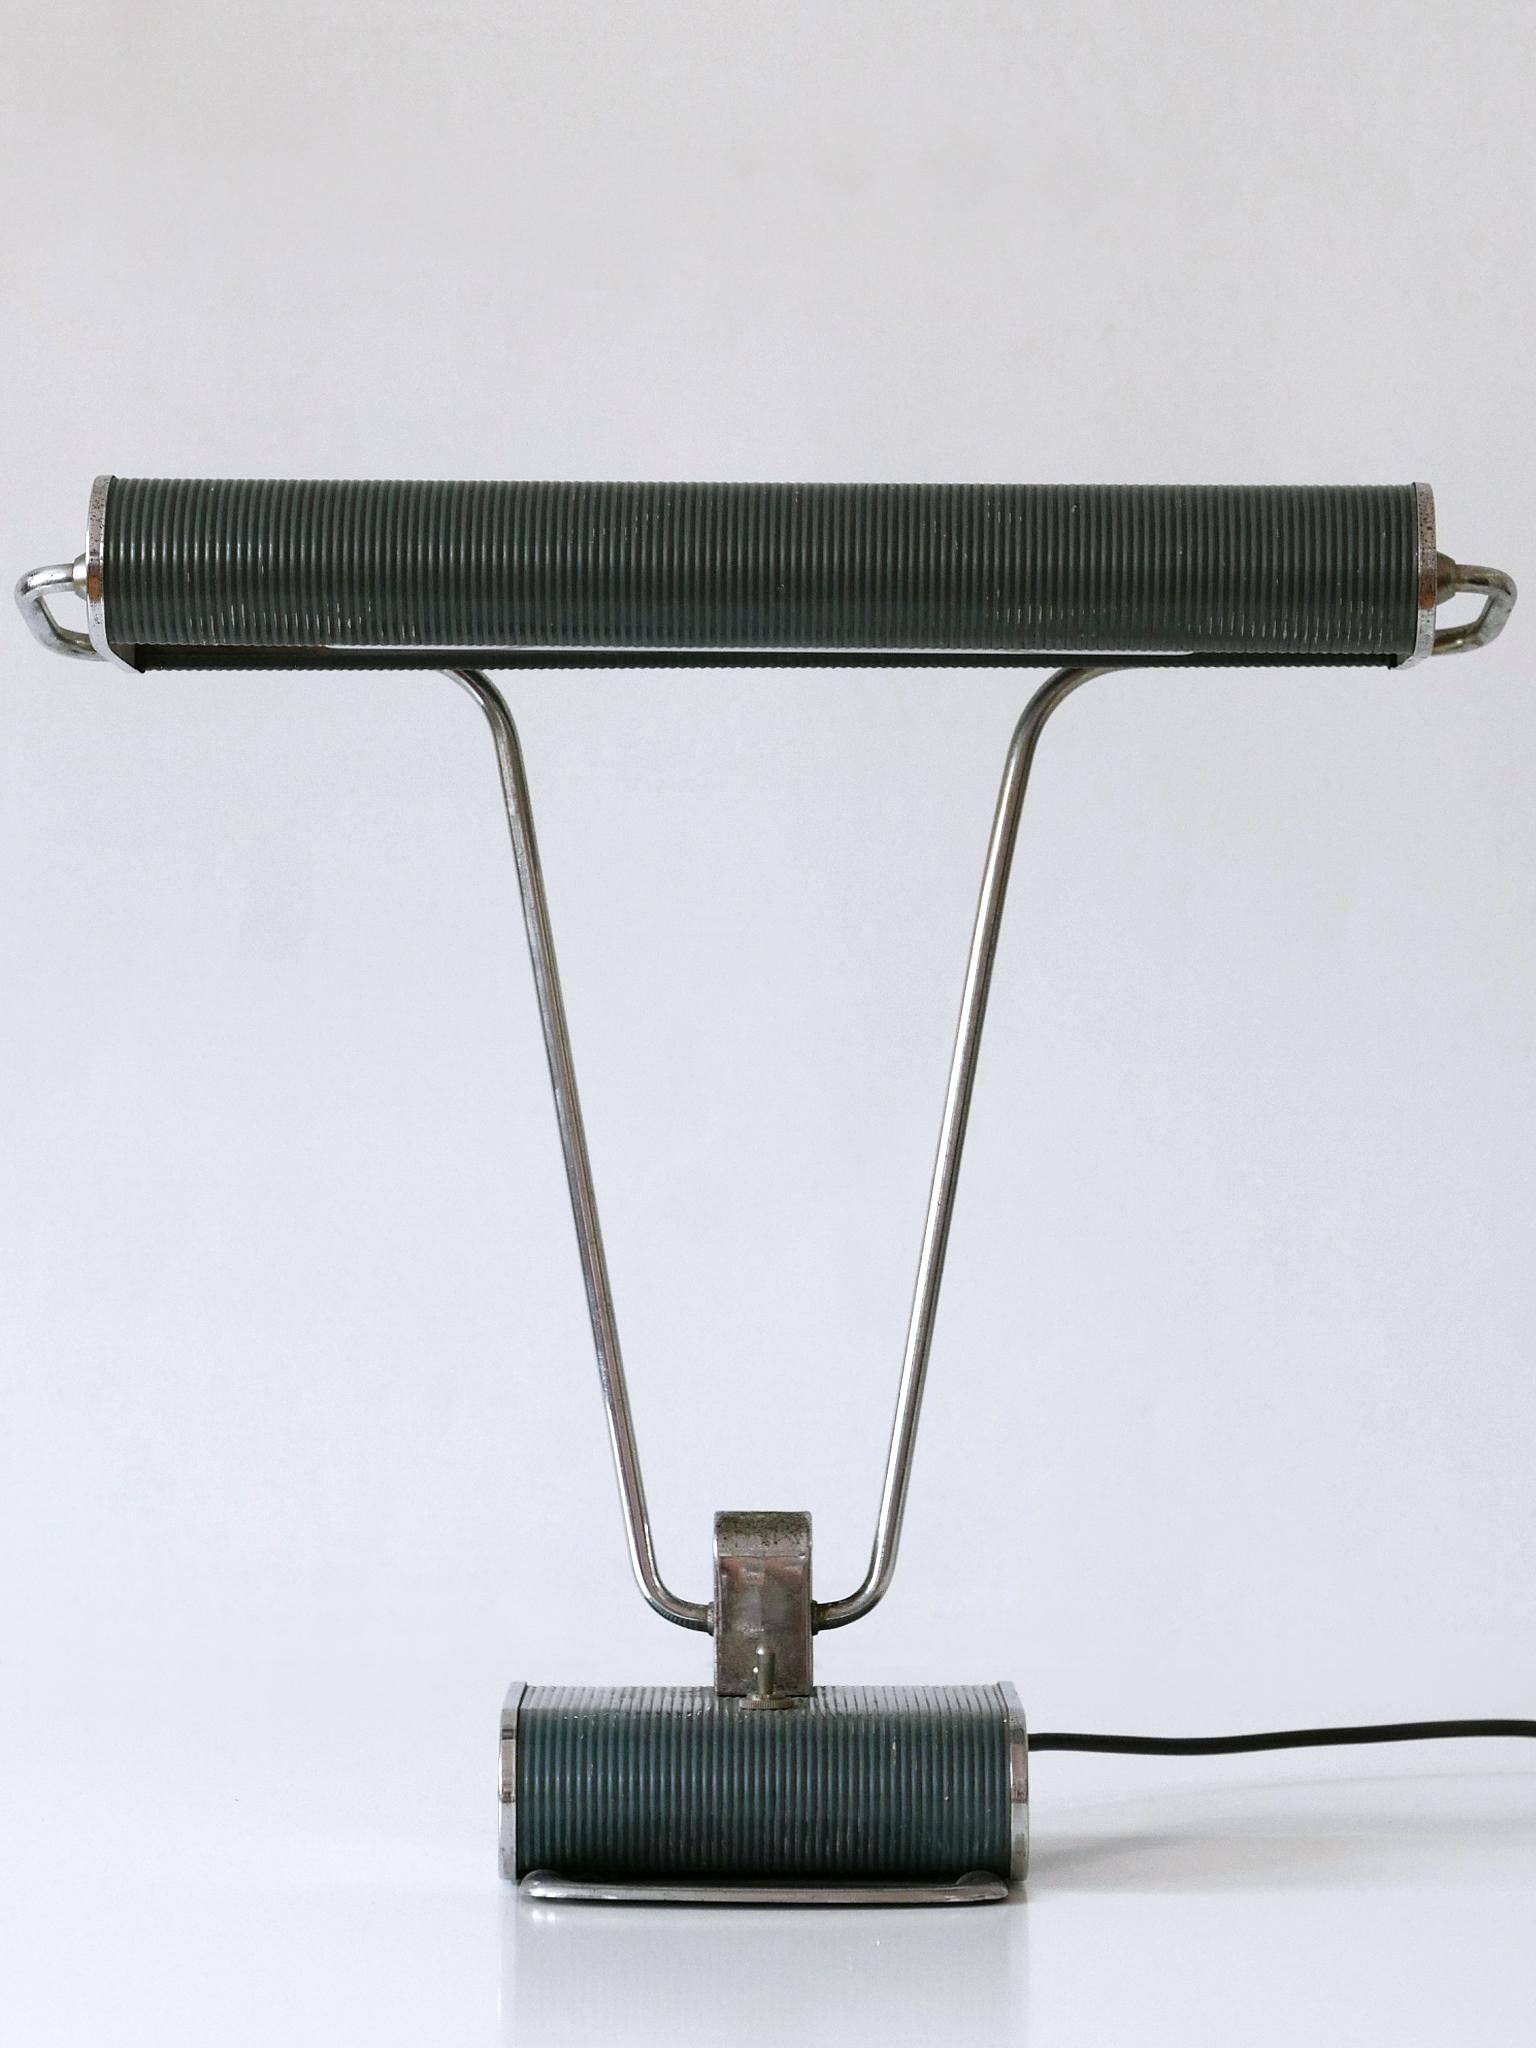 Chrome Art Deco Table Lamp or Desk Light 'No 71' by André Mounique for Jumo 1930s For Sale